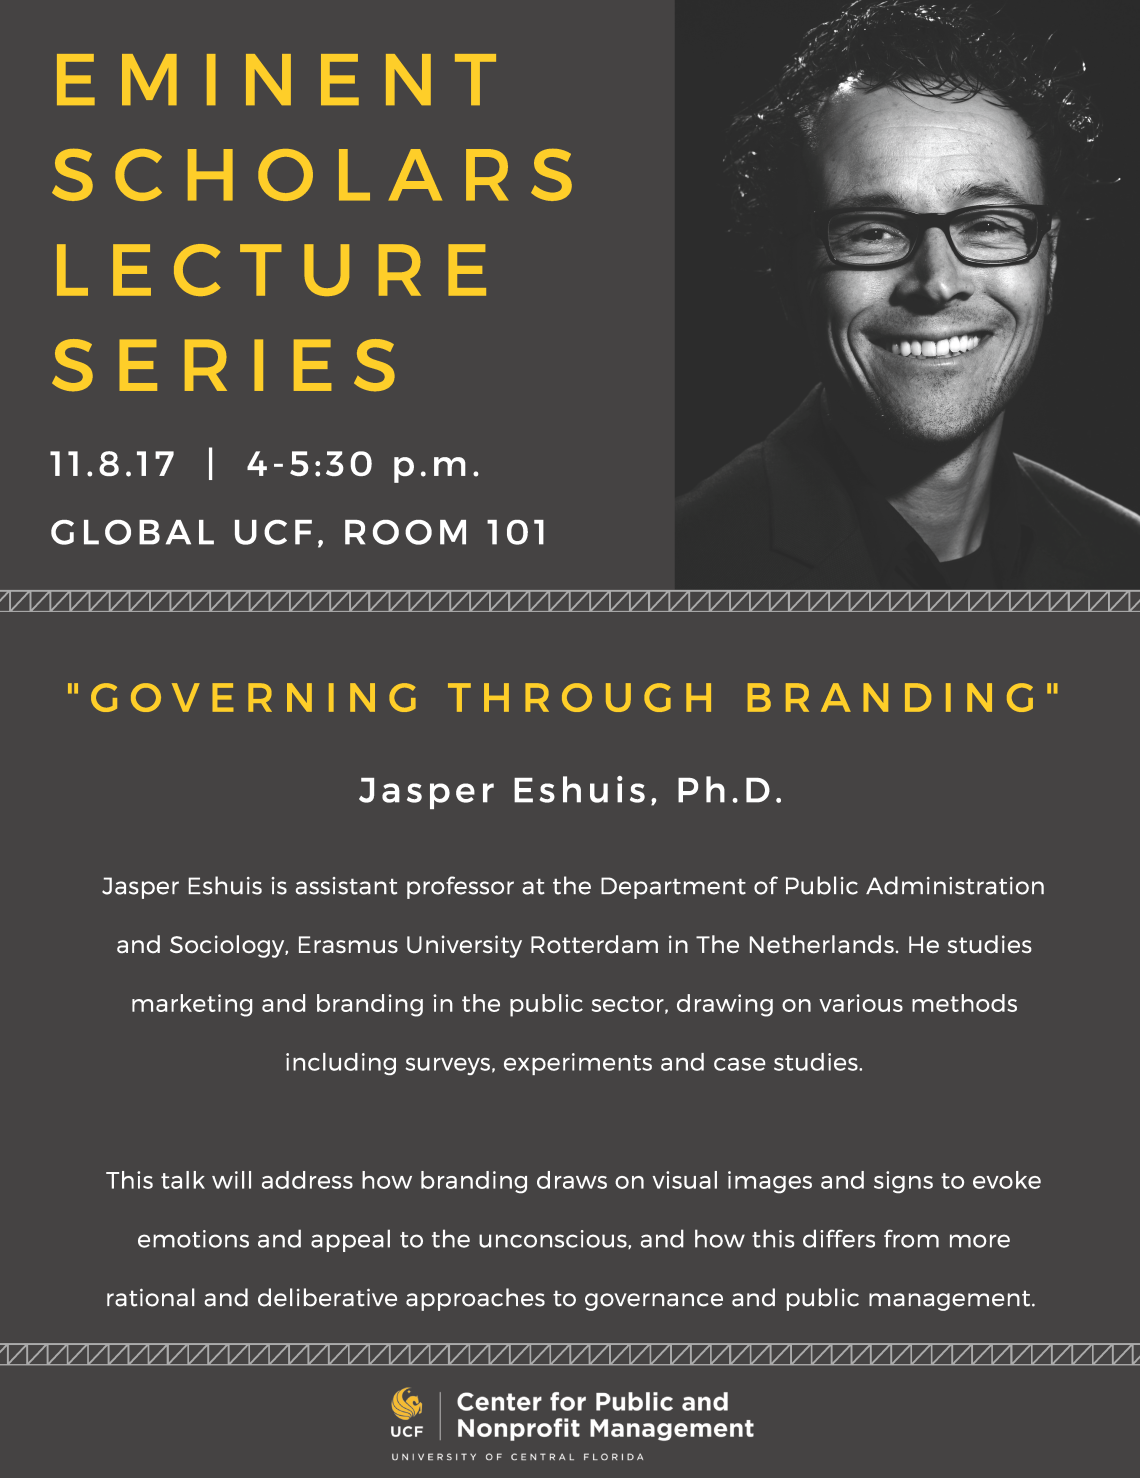 Jsper Eshuis, Ph.D. | 11.8.17 | 4-5:30pm | Global UCF, Room 101